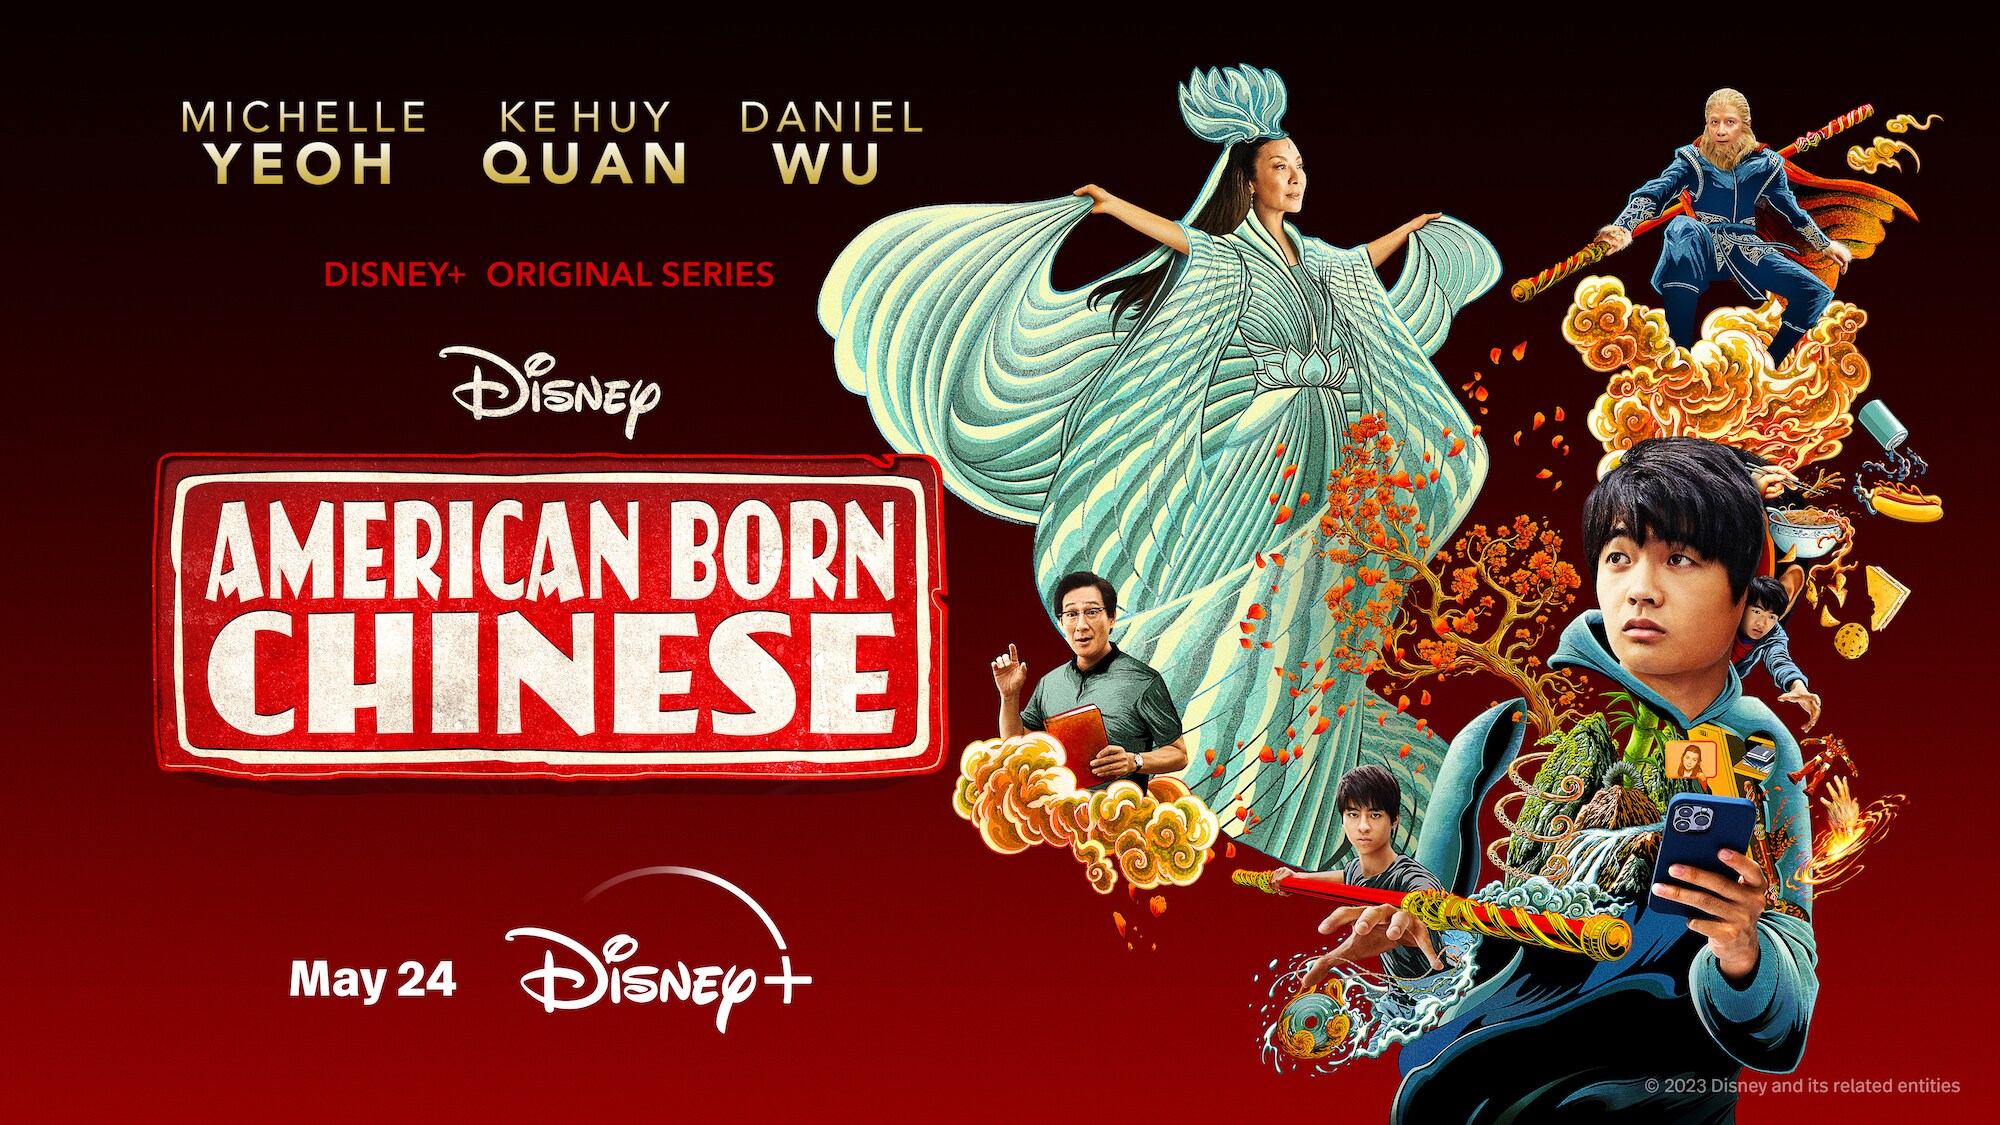 Disney+ Original Series "American Born Chinese"